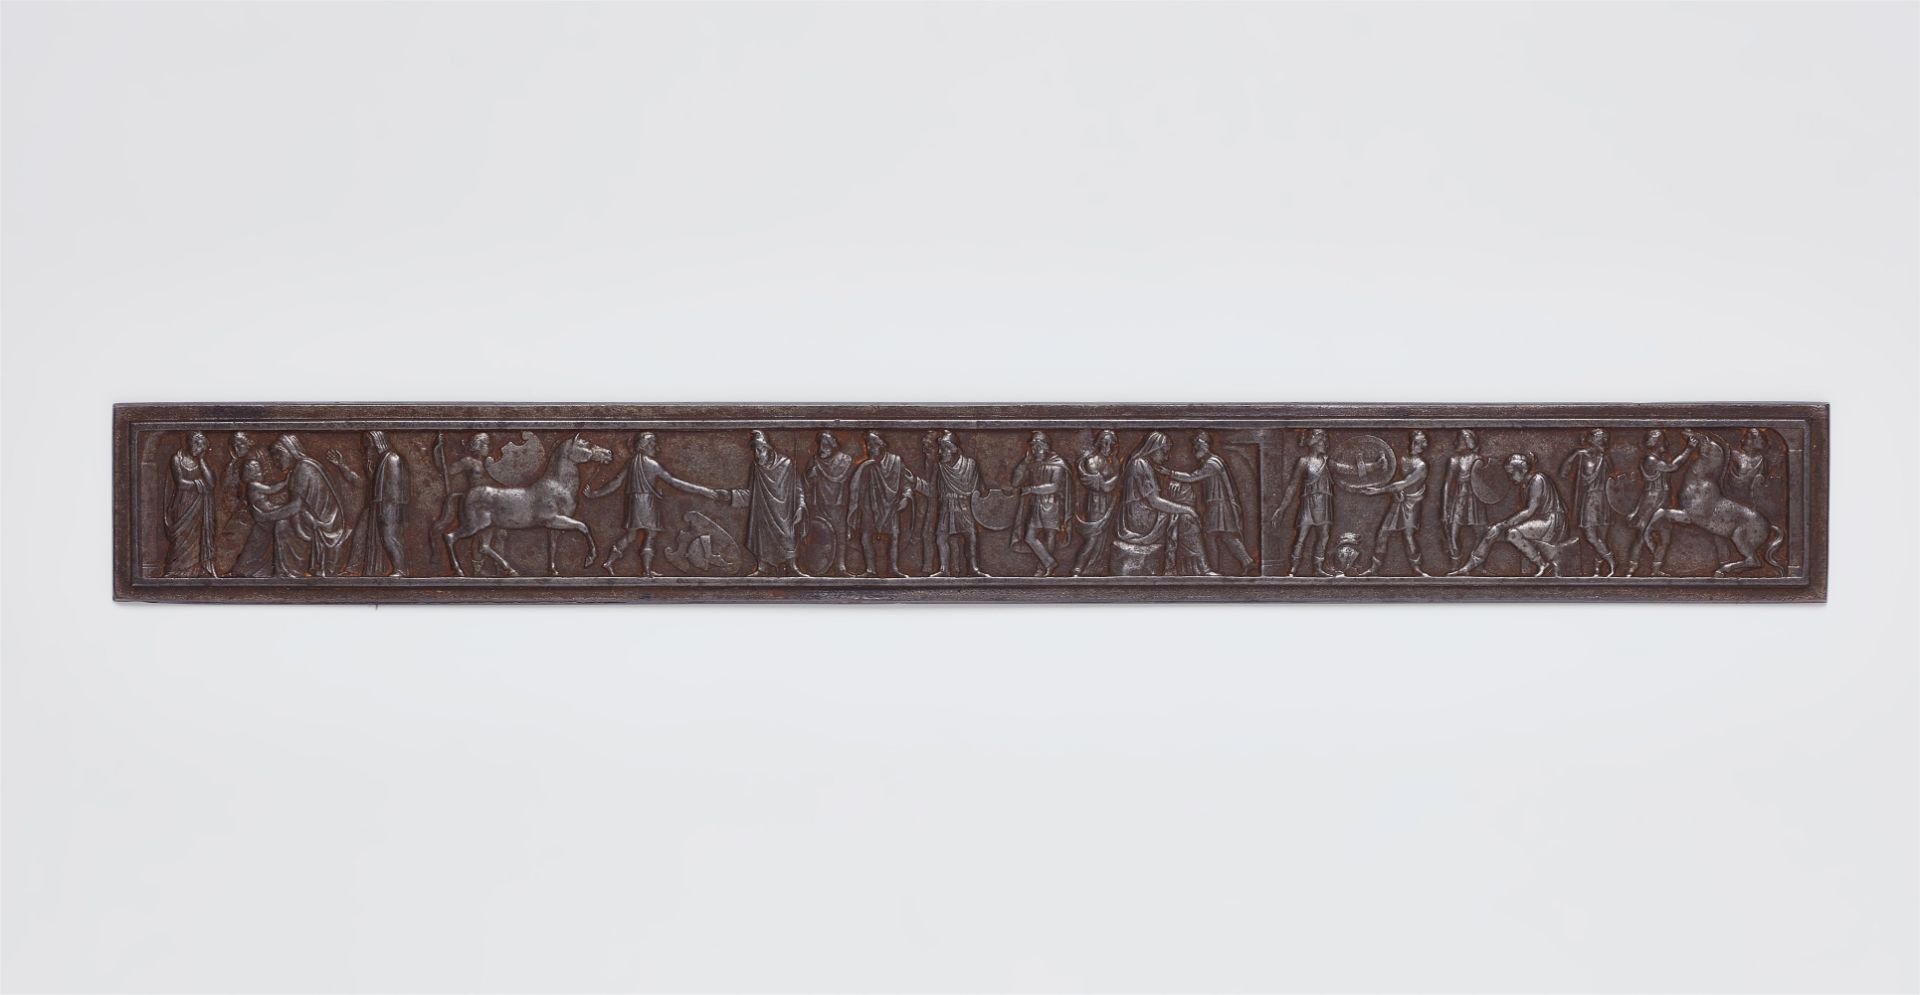 A rare cast iron ruler with Classical frieze motifs